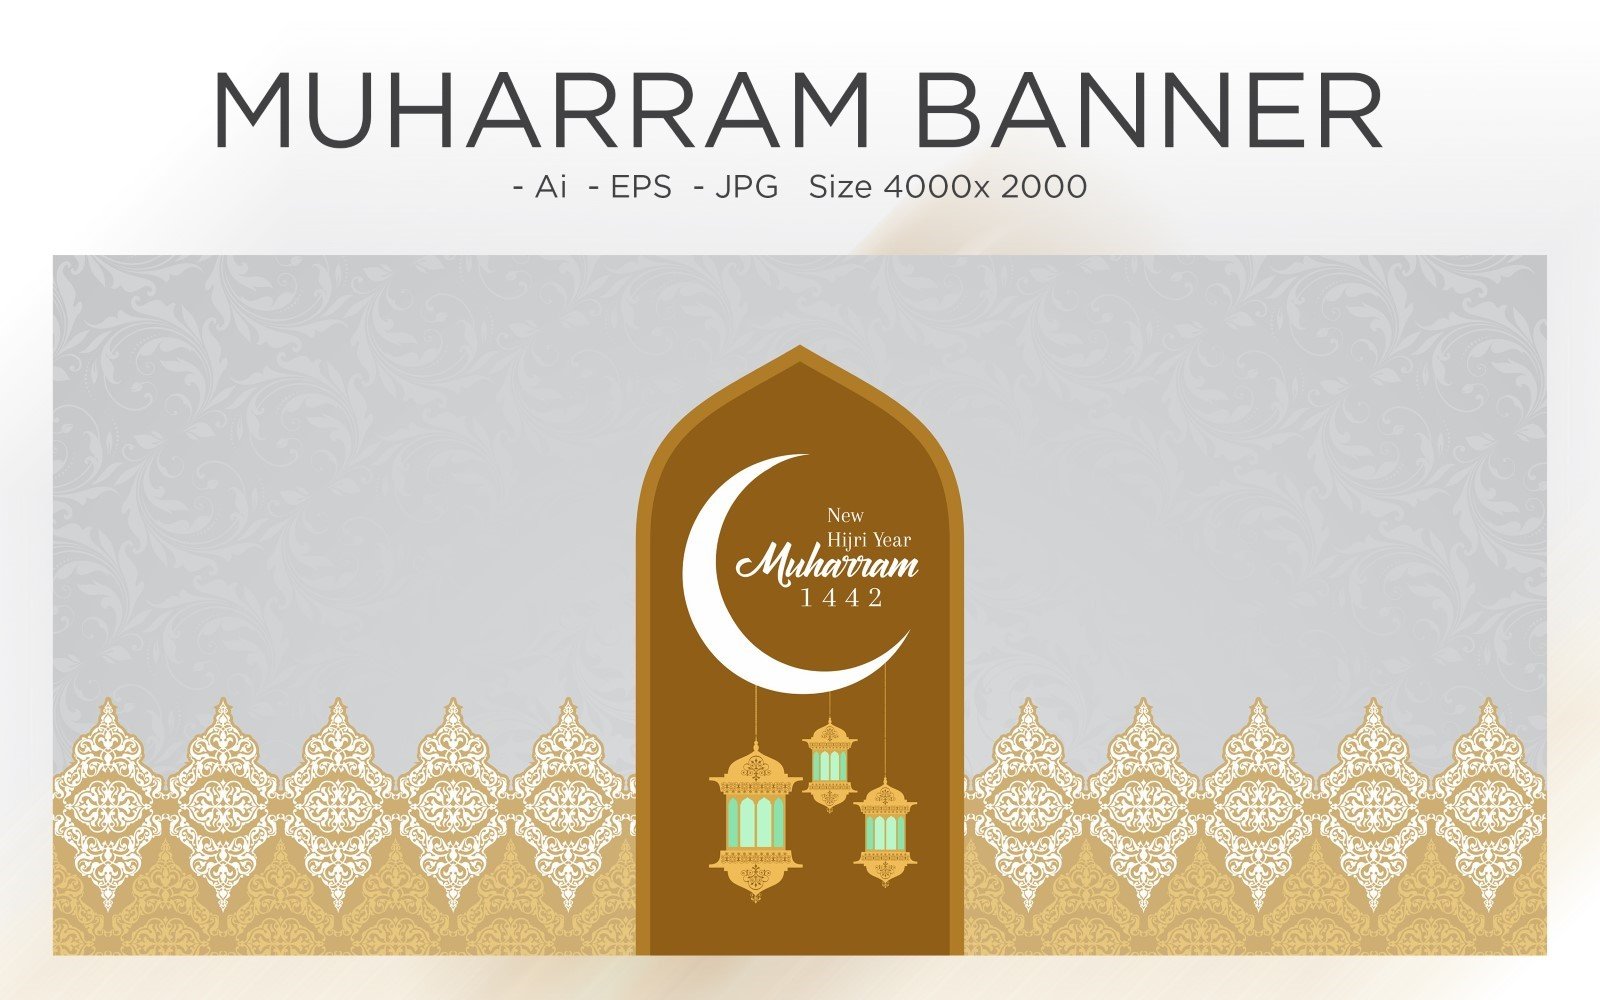 Muharram Islamic Arch and Lanterns Design Banner Template - Illustration